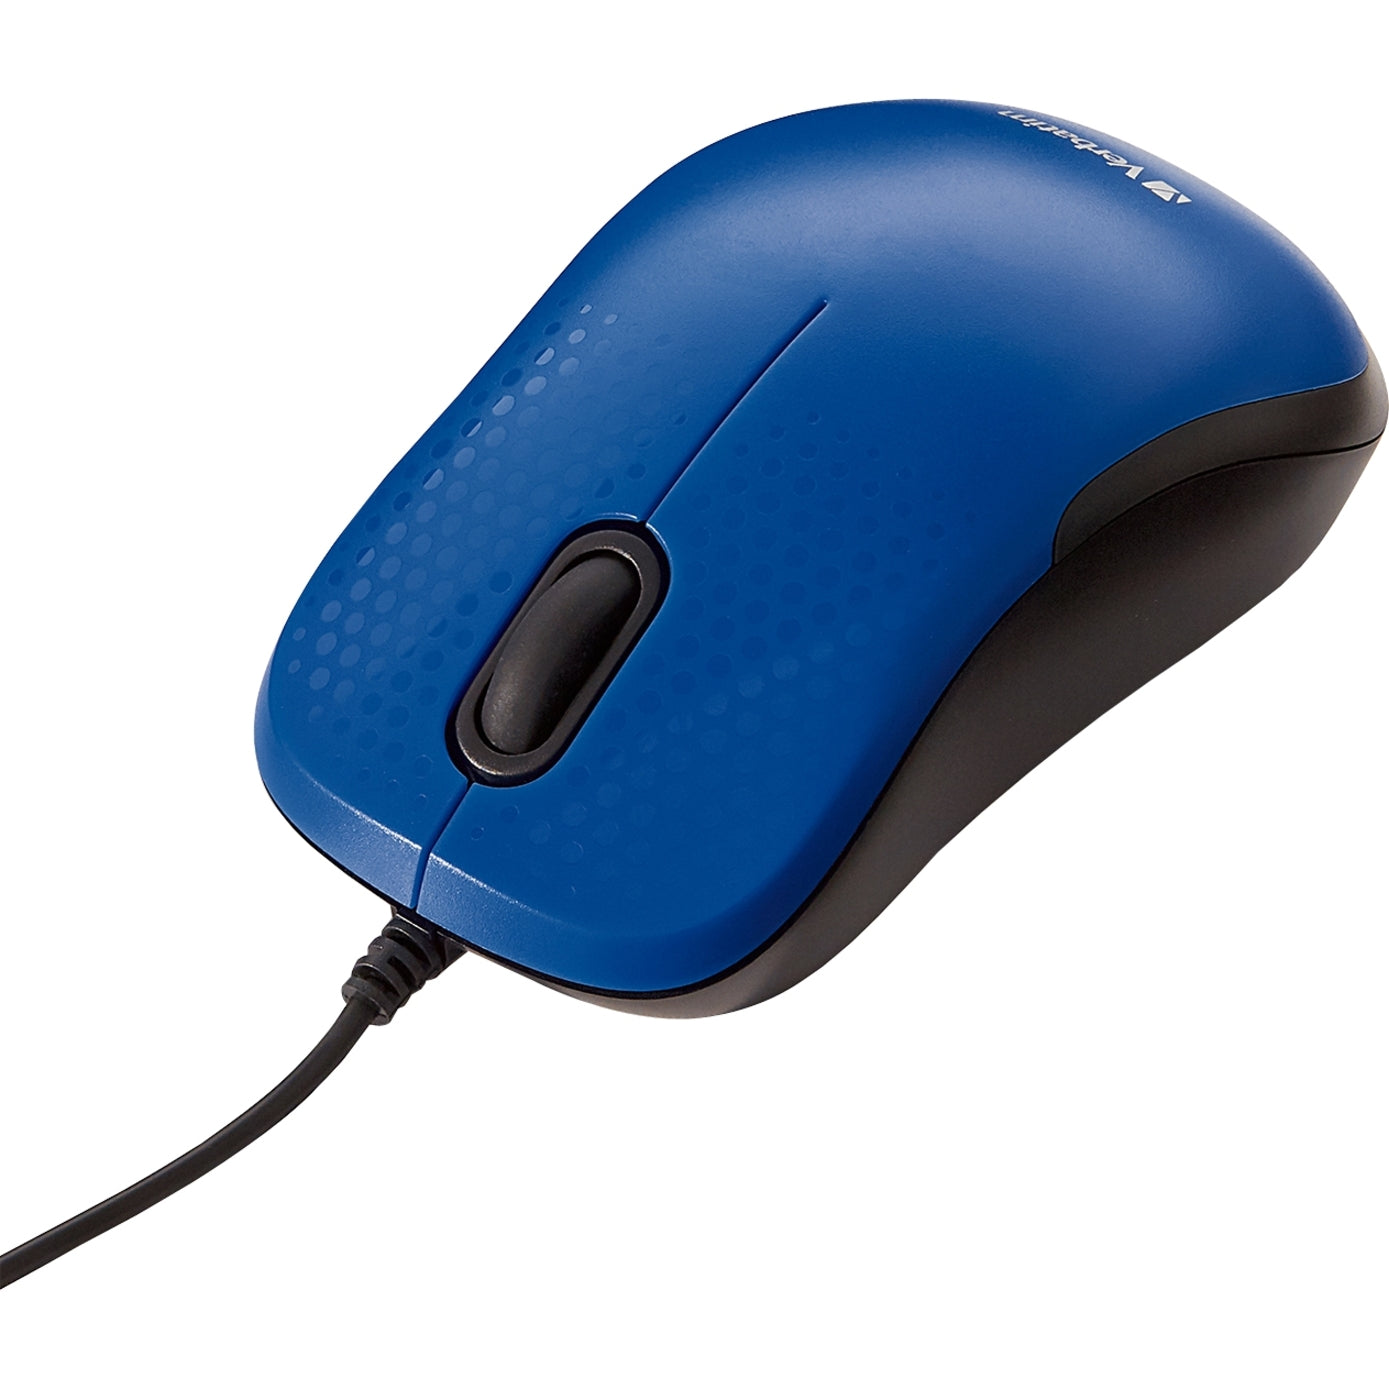 Verbatim 70233 Silent Corded Optical Mouse - Blue, USB Scroll Wheel, 1 Year Warranty